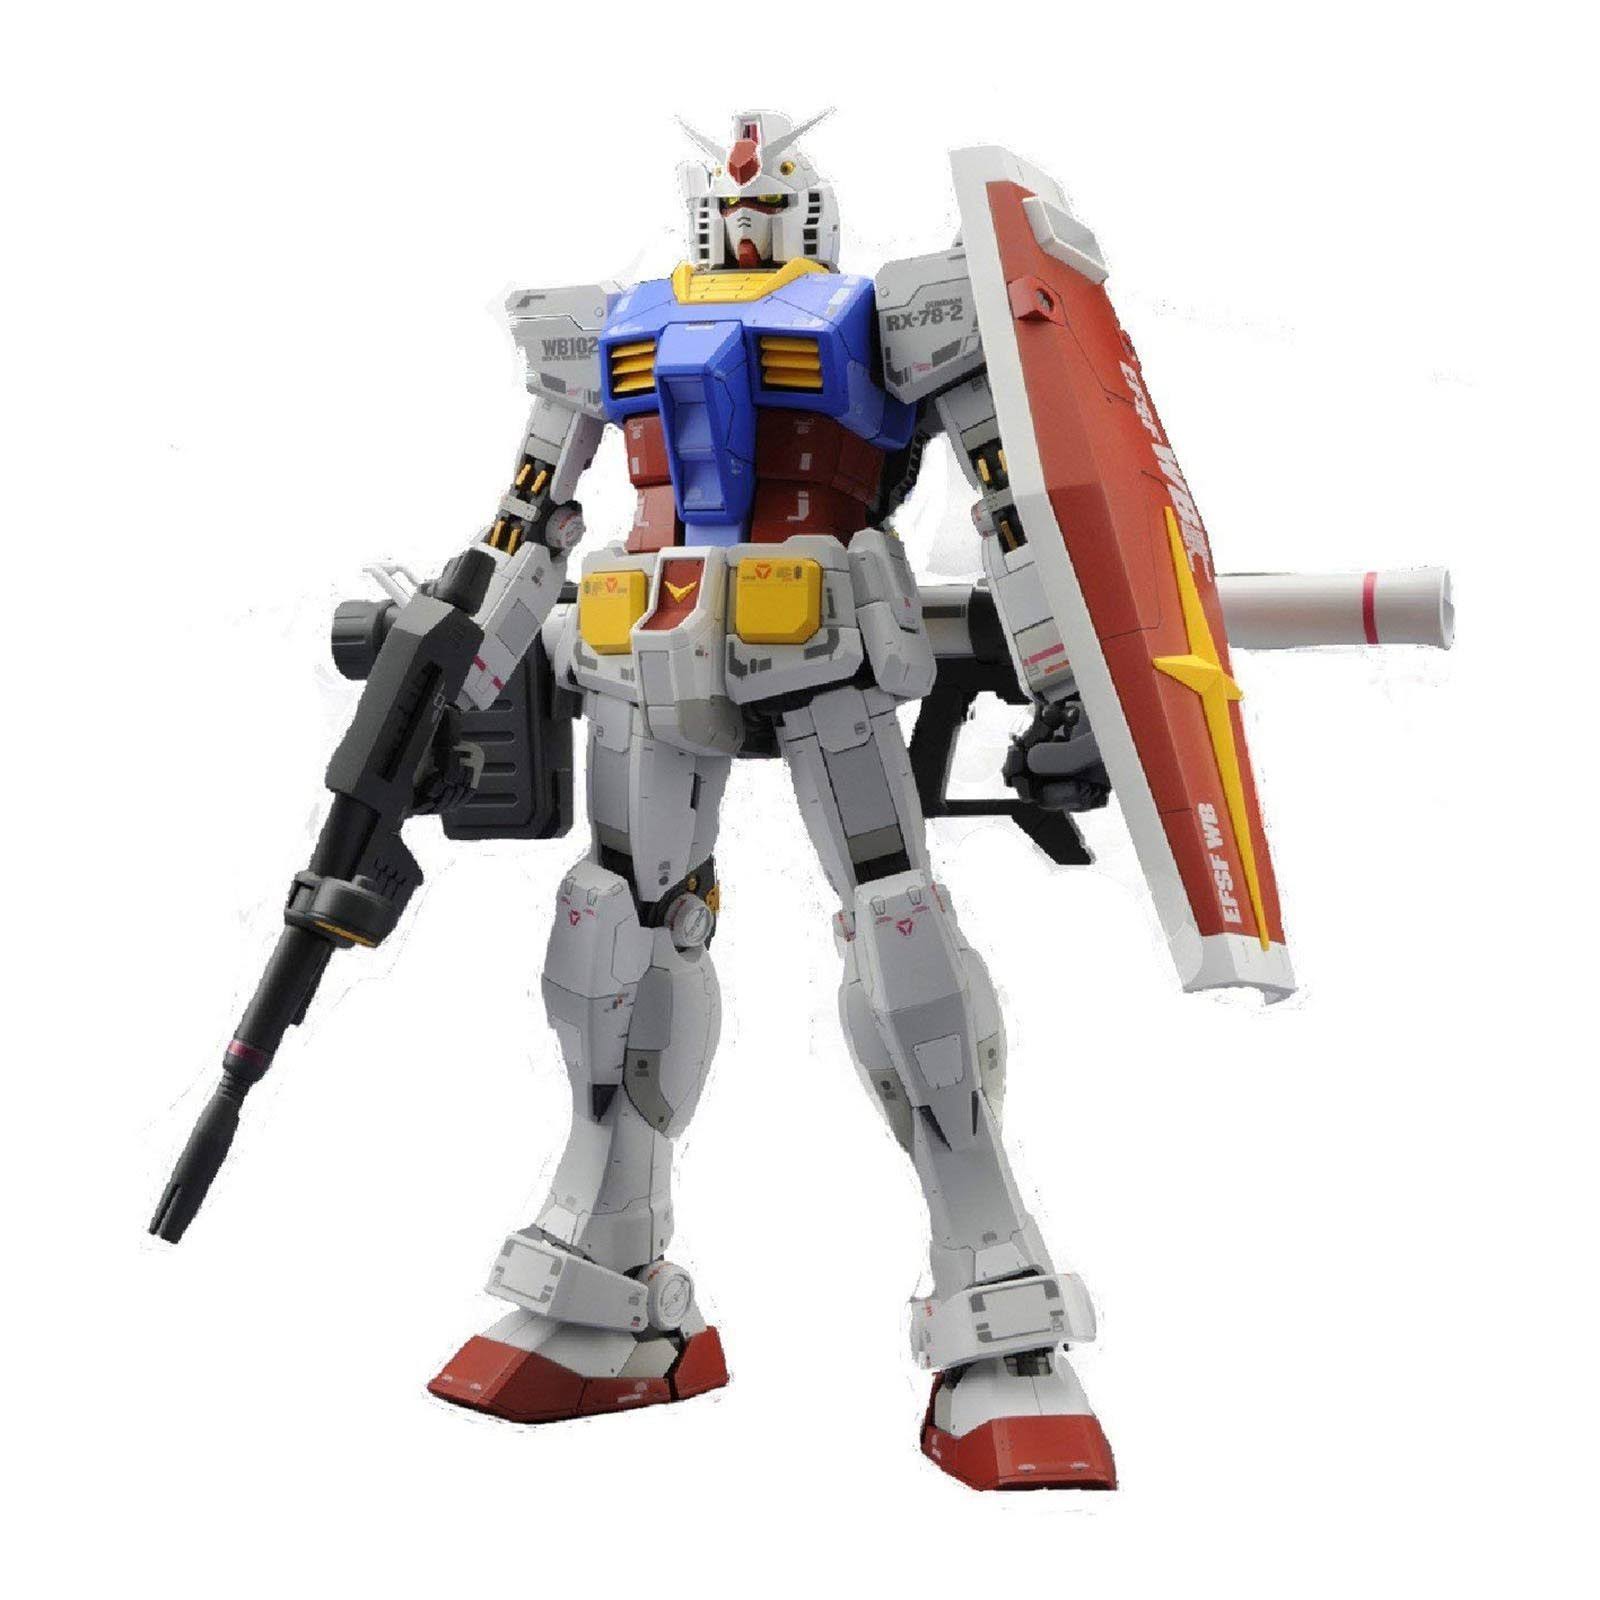 Bandai Hobby MG Gundam RX-78-2 Ver. 3.0 Action Figure Model Kit - 1:100 Scale